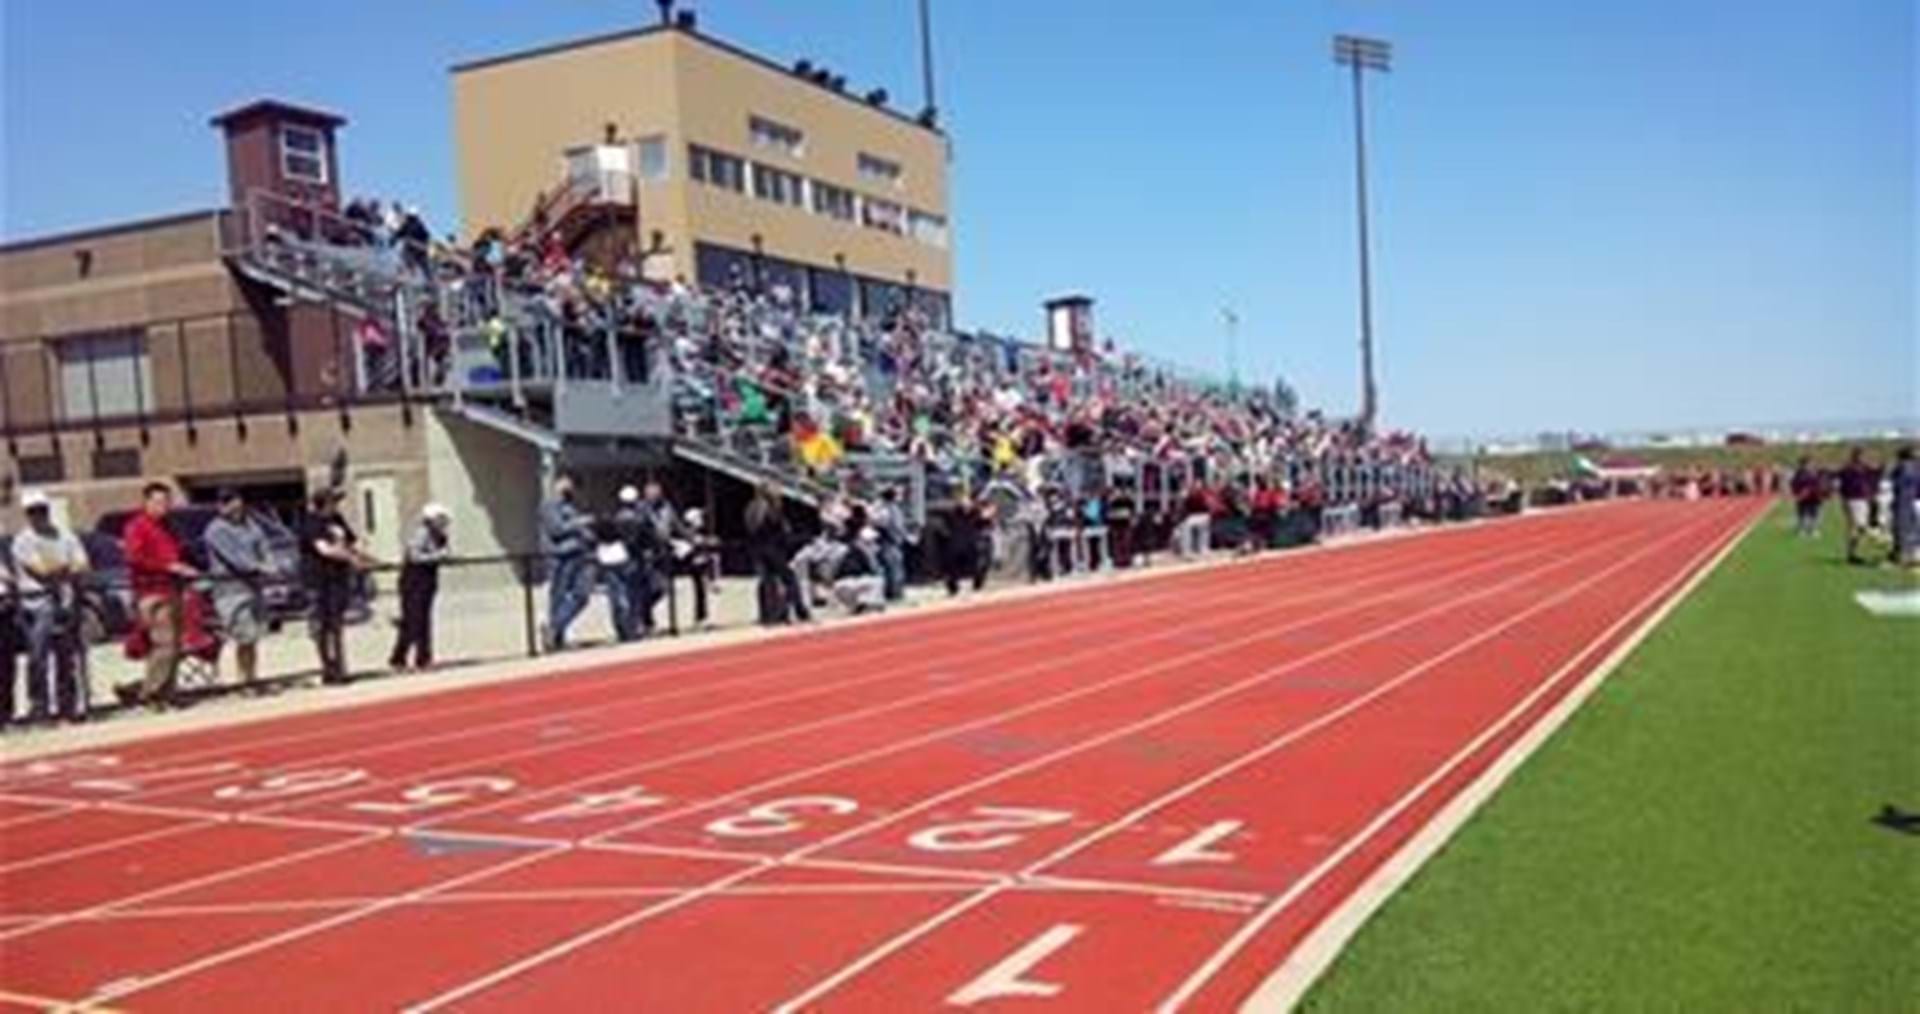 Statesman Stadium: College/High School Football Field, Lacrosse Fields, Drost Soccer Field, and Track